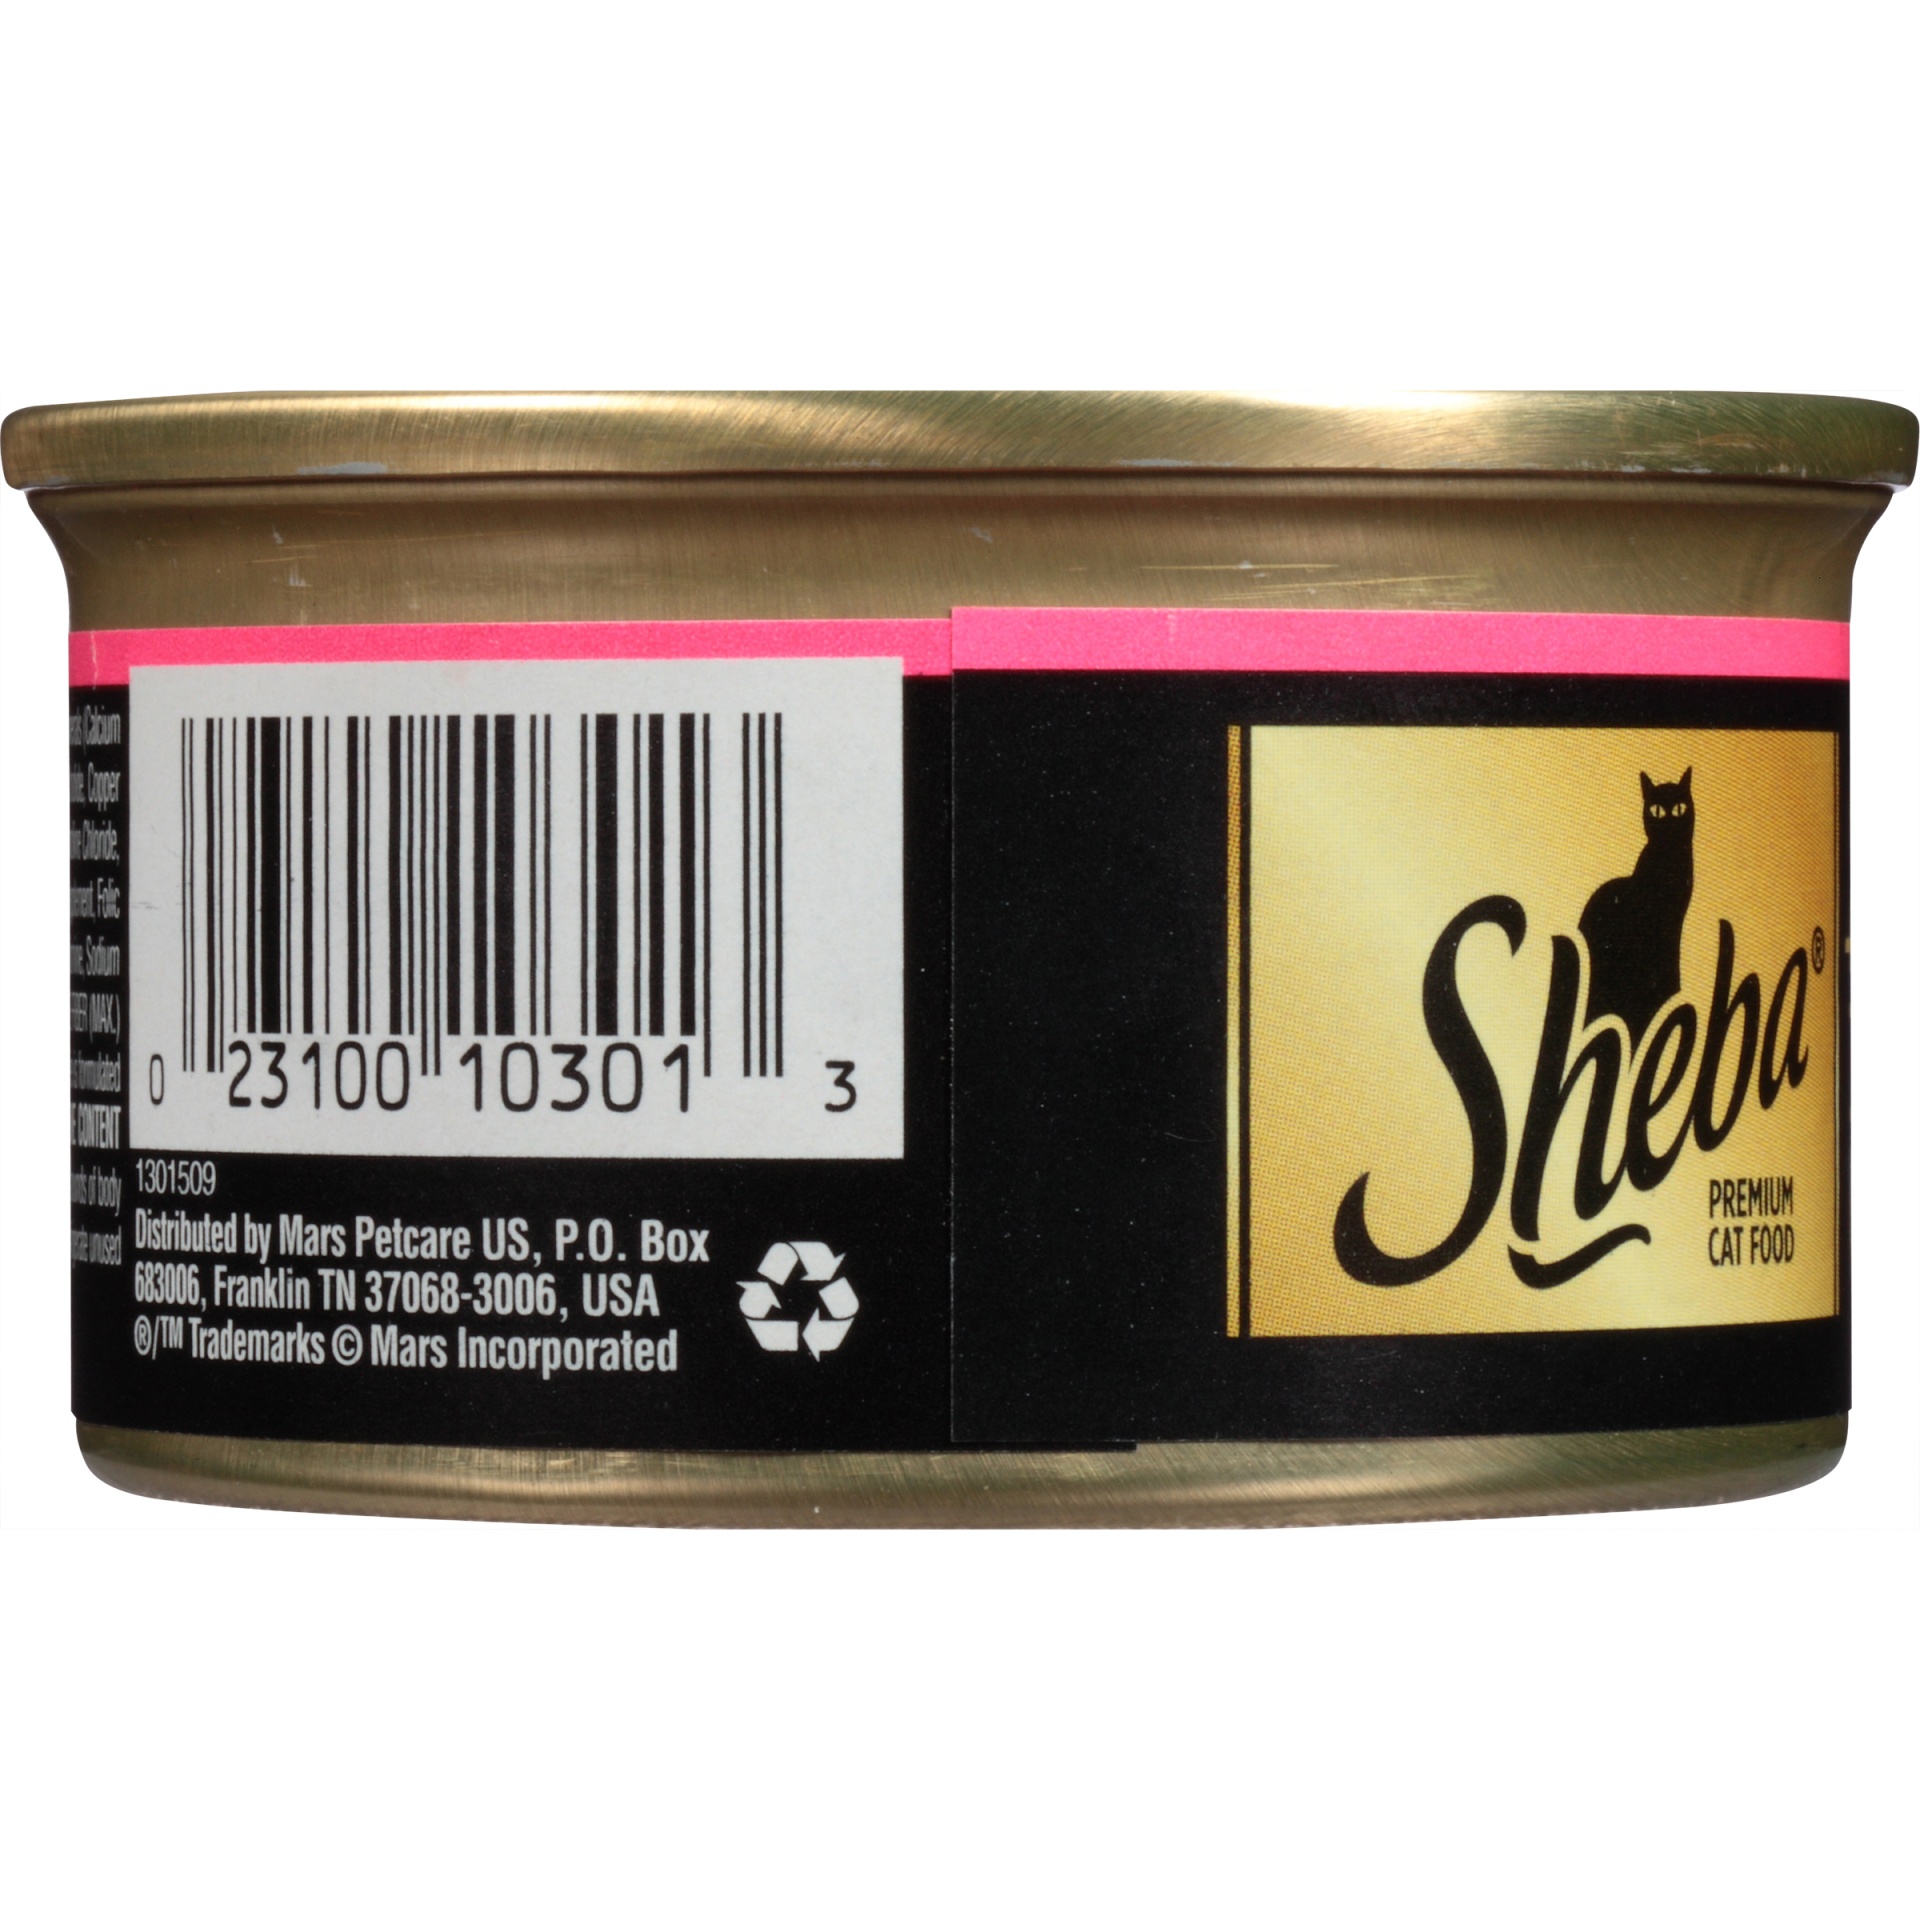 slide 4 of 9, Sheba Cuts in Gravy Salmon Entree Premium Cat Food, 3 oz